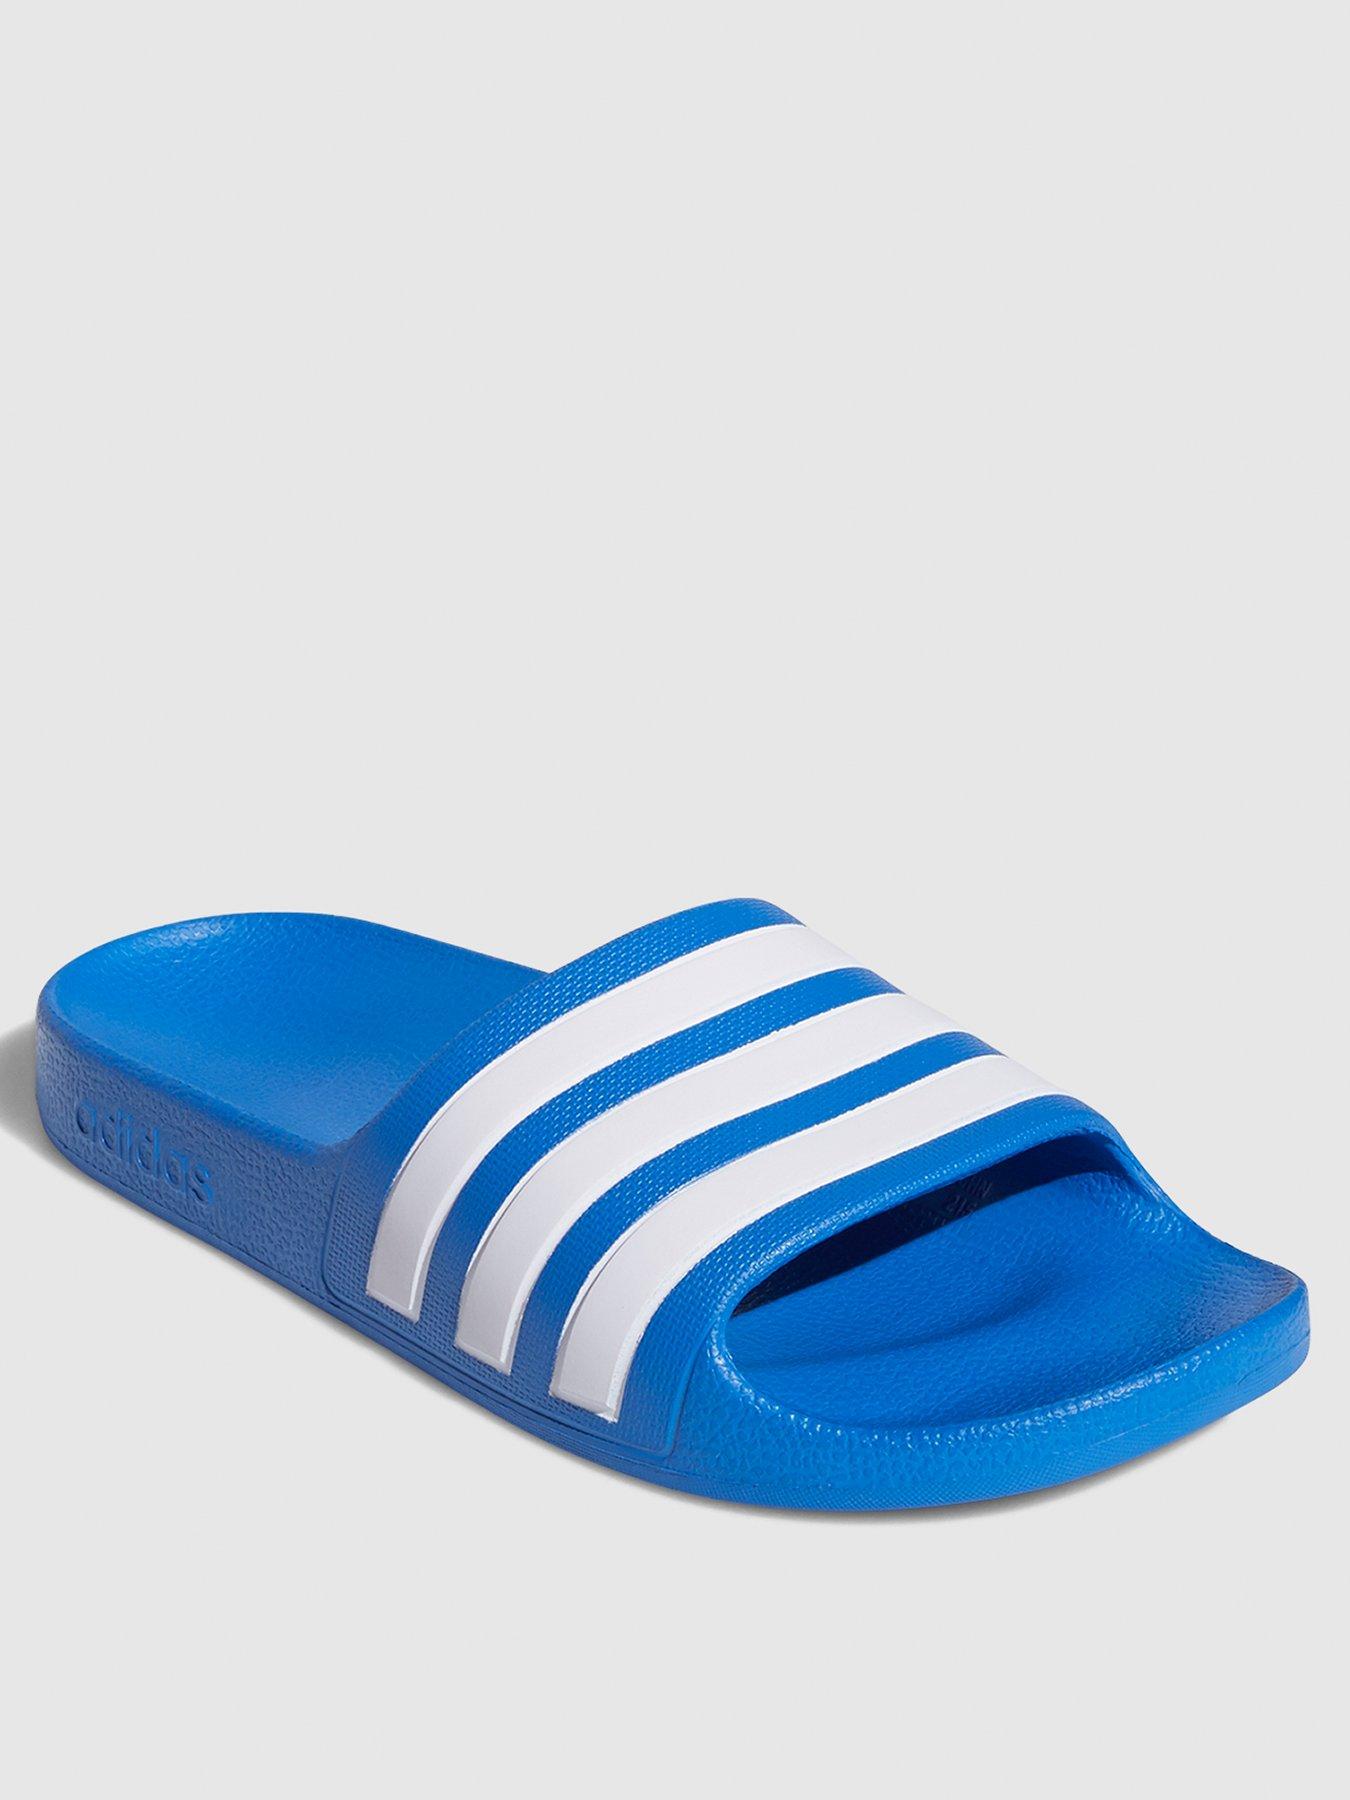 Adidas | Sandals \u0026 flip flops | Shoes 